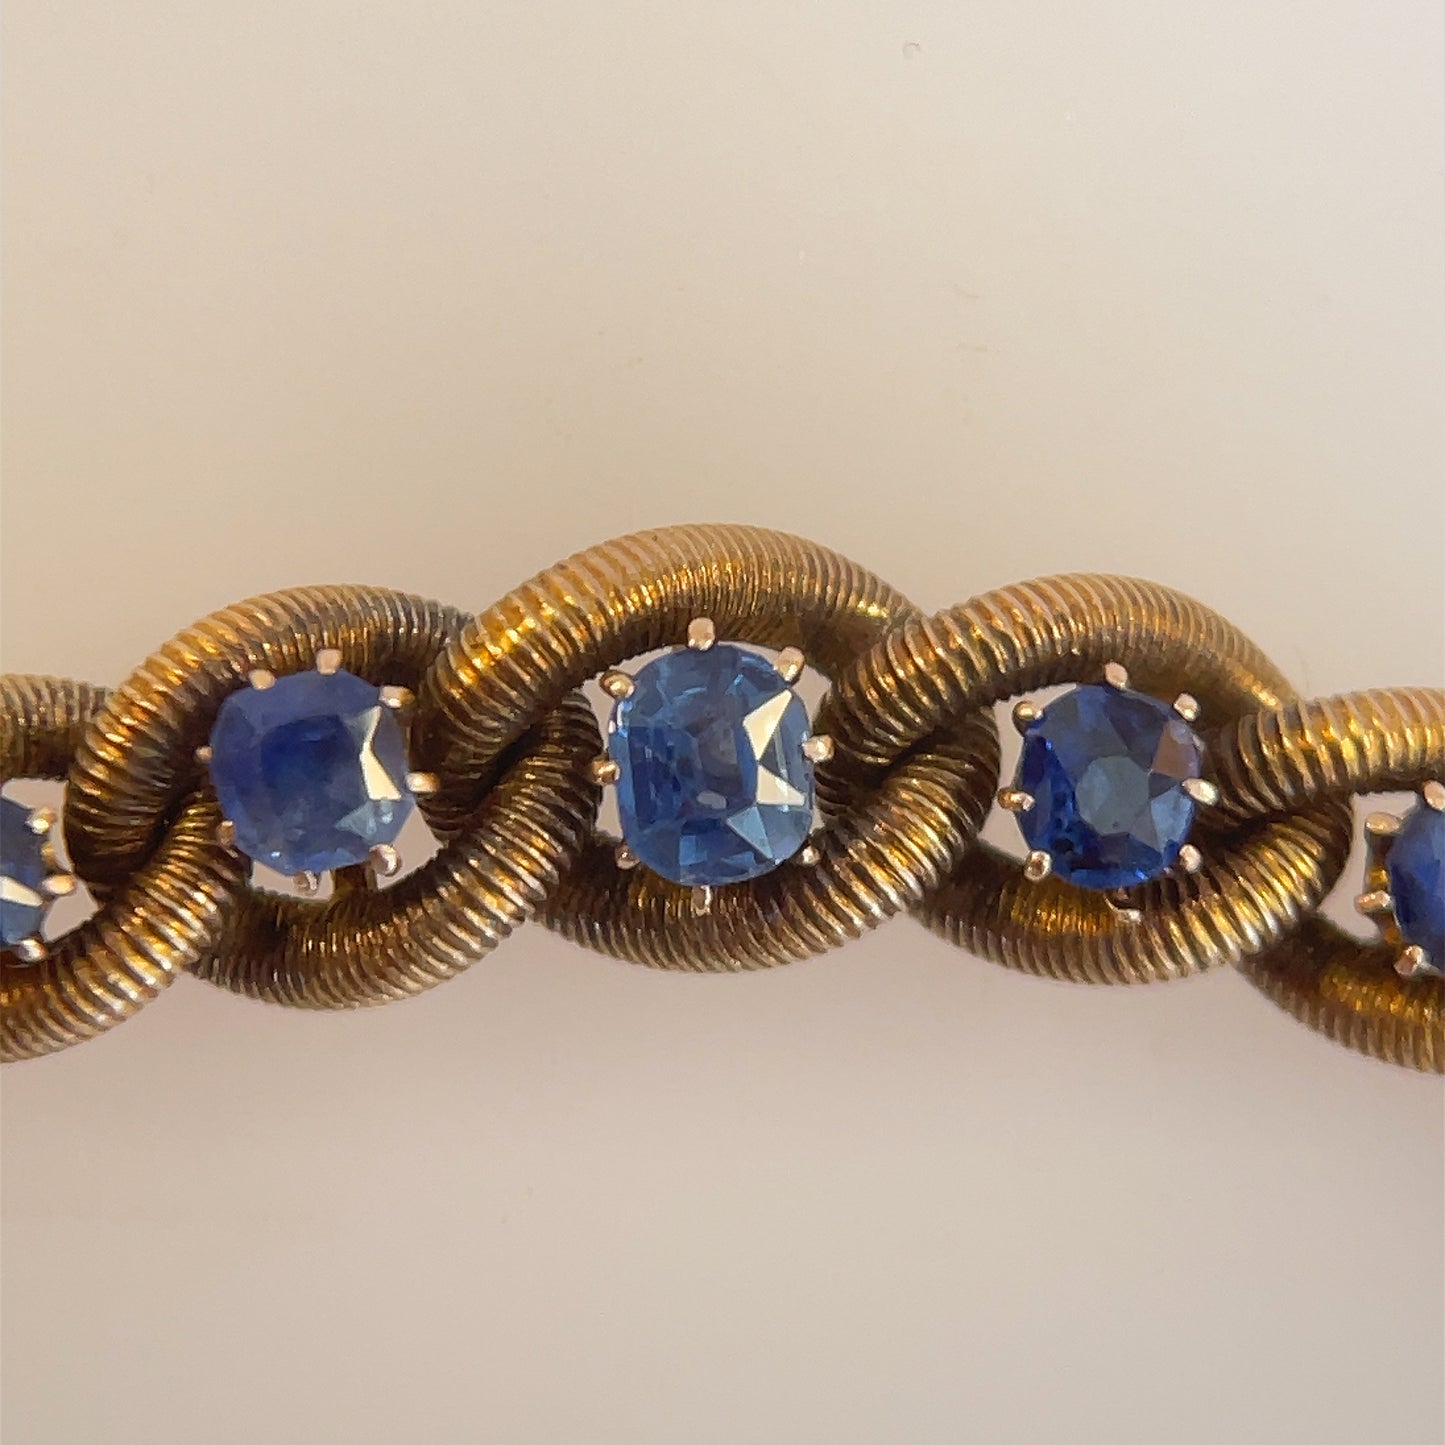 Russian Hallmarks Victorian Era (Circa 1870s) 1ct Natural Sapphires 14KY Antique Bracelet